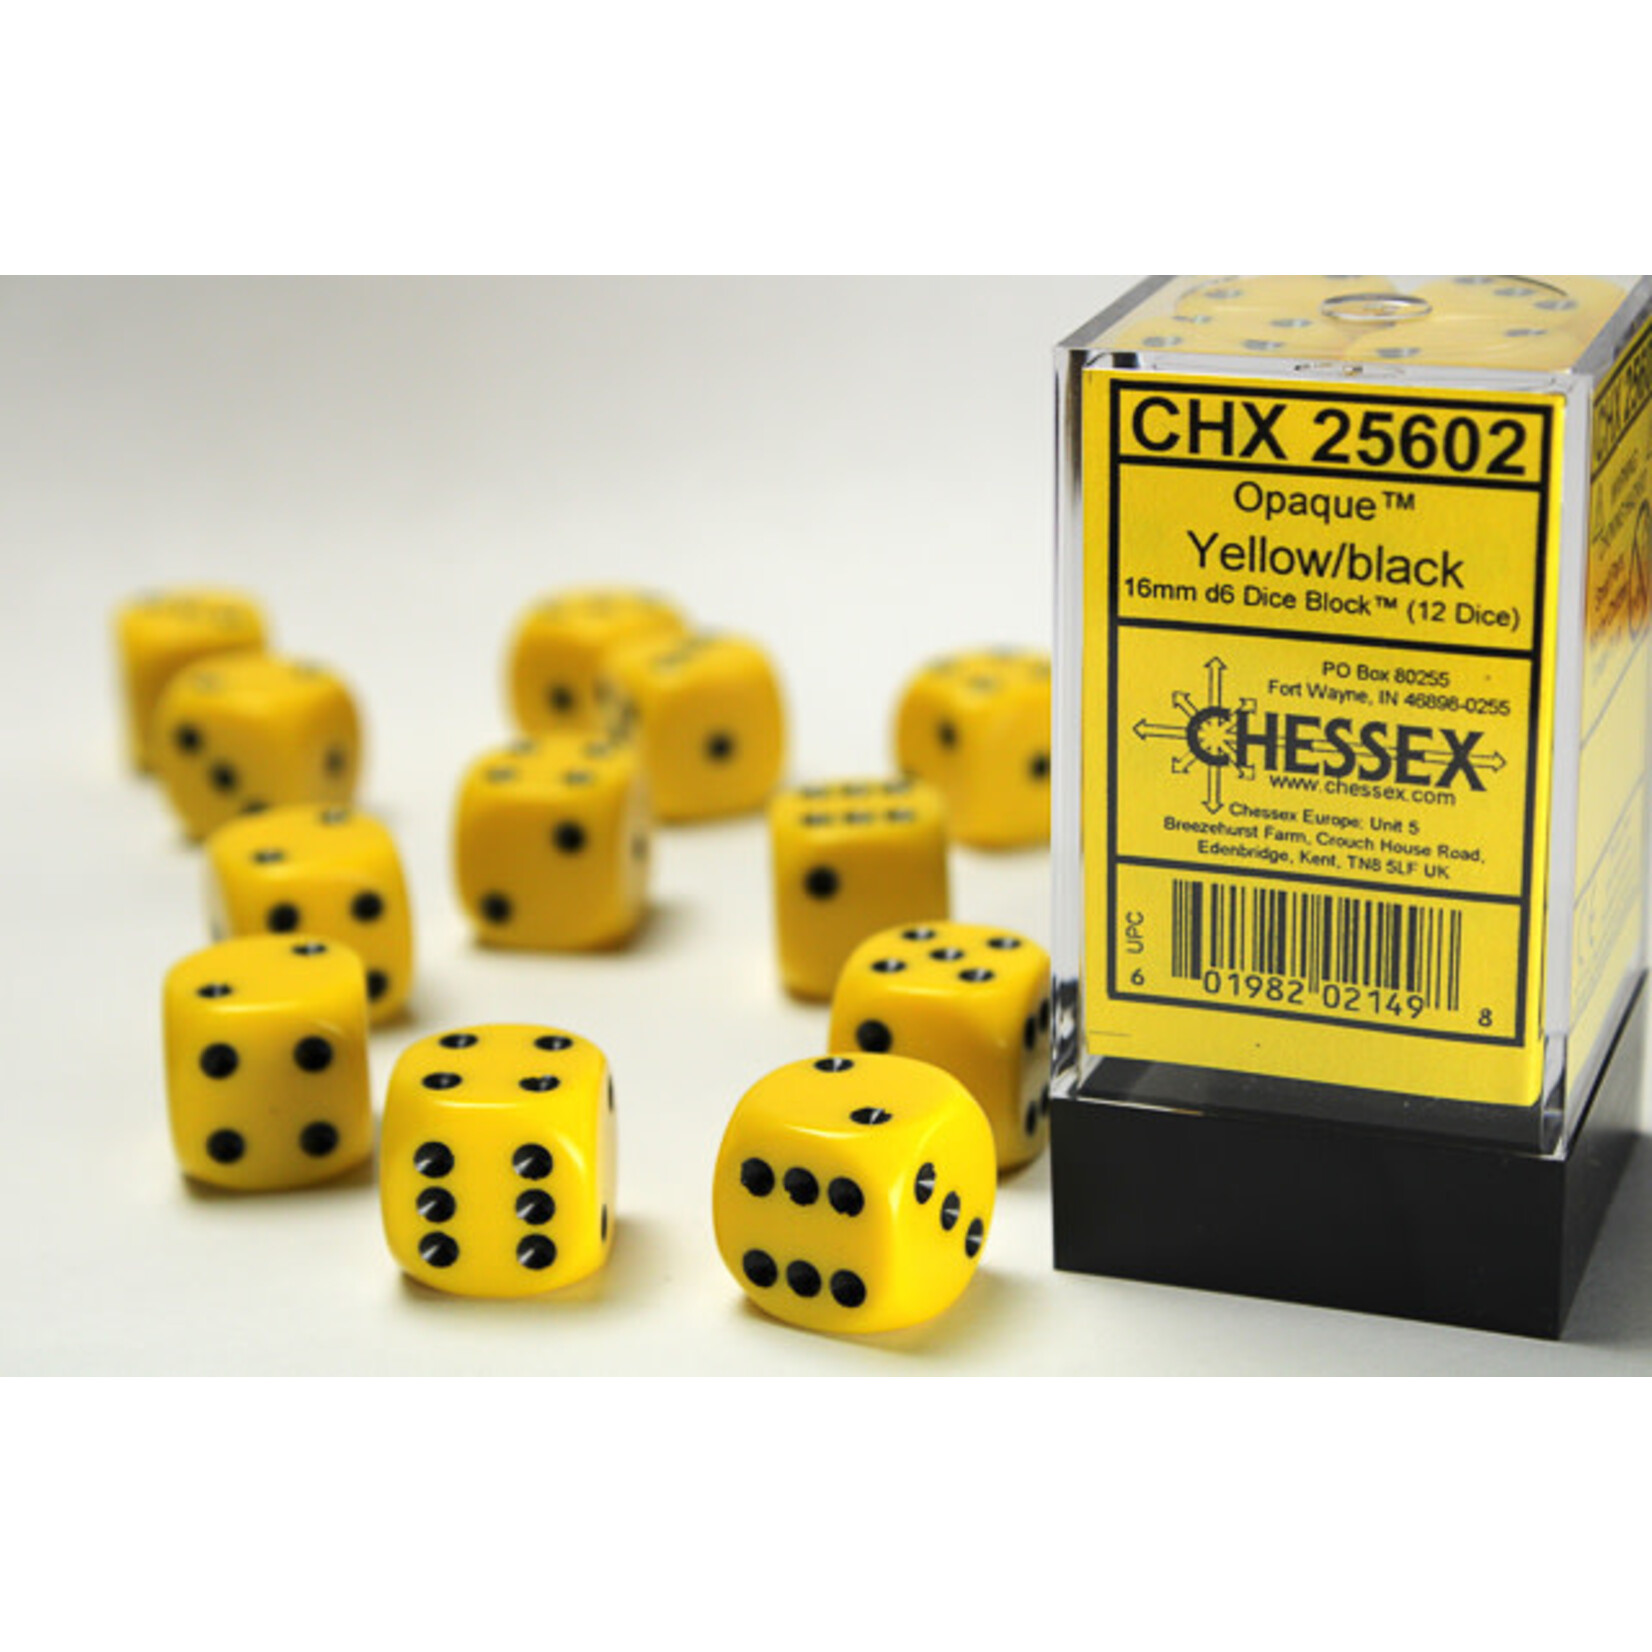 Chessex Opaque Yellow/black 16mm d6 Dice Block (12 dice)